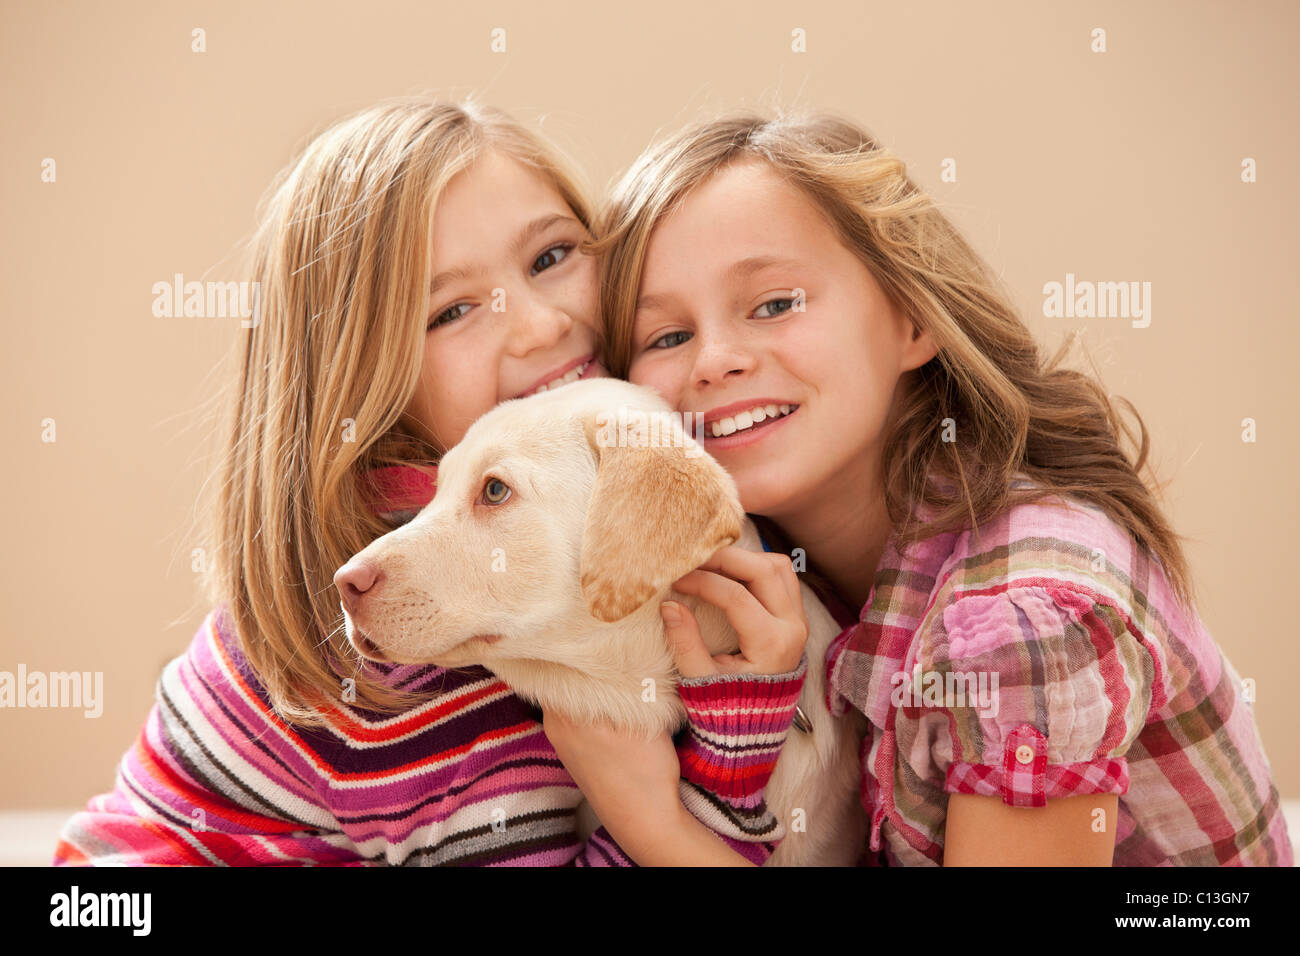 USA, Utah, Lehi, Portrait of two girls (10-11) embracing Labrador Stock Photo